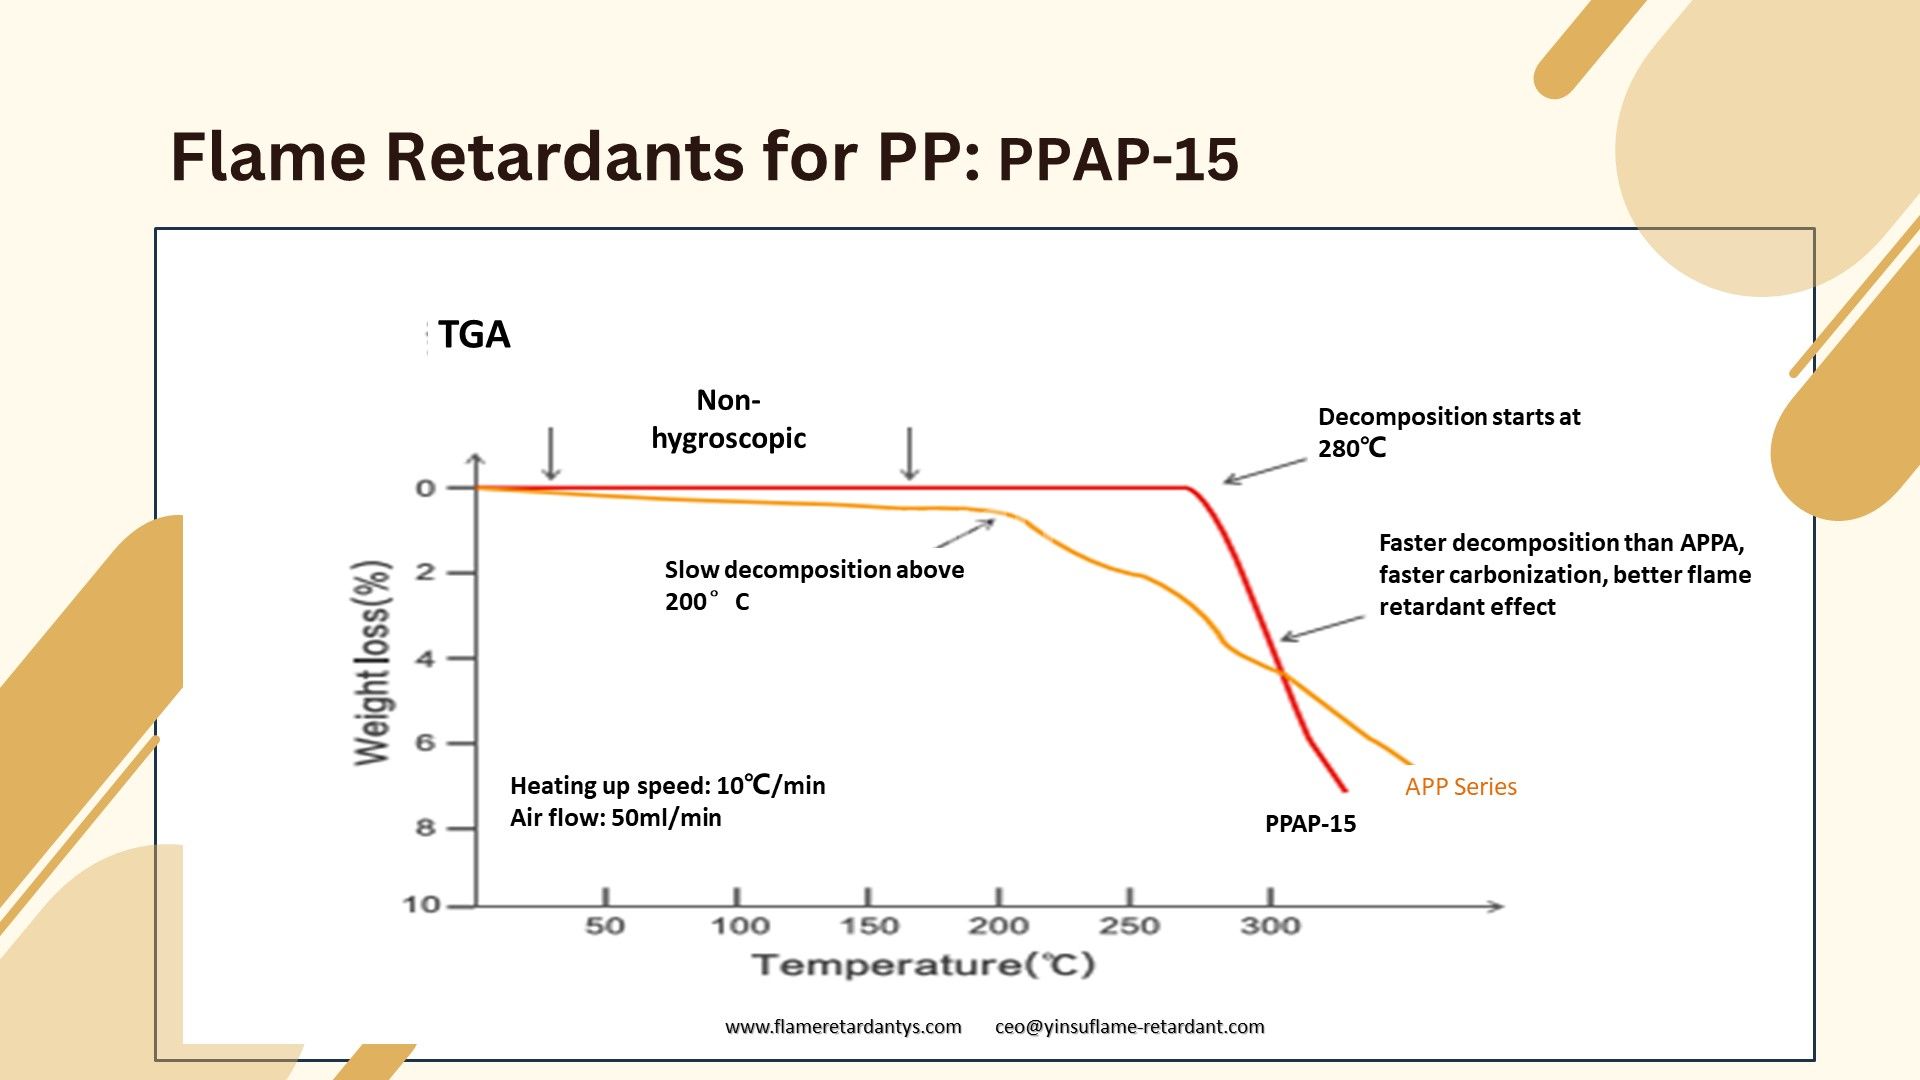 Flame Retardants for PP PPAP-15